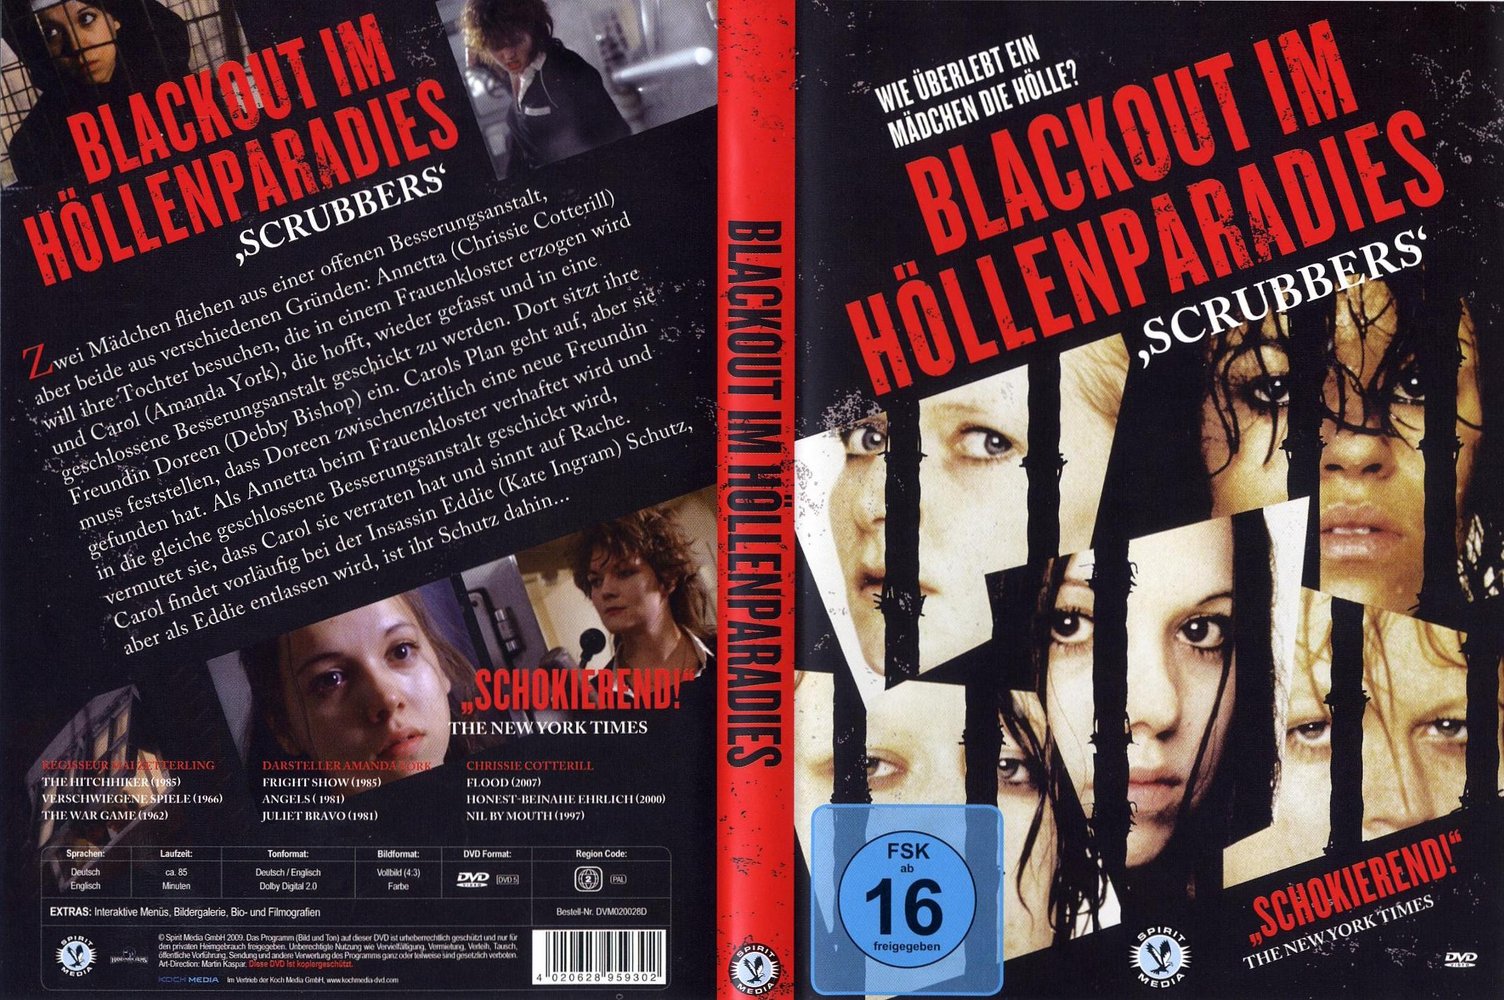 The Blackout DVD jetzt bei  online bestellen